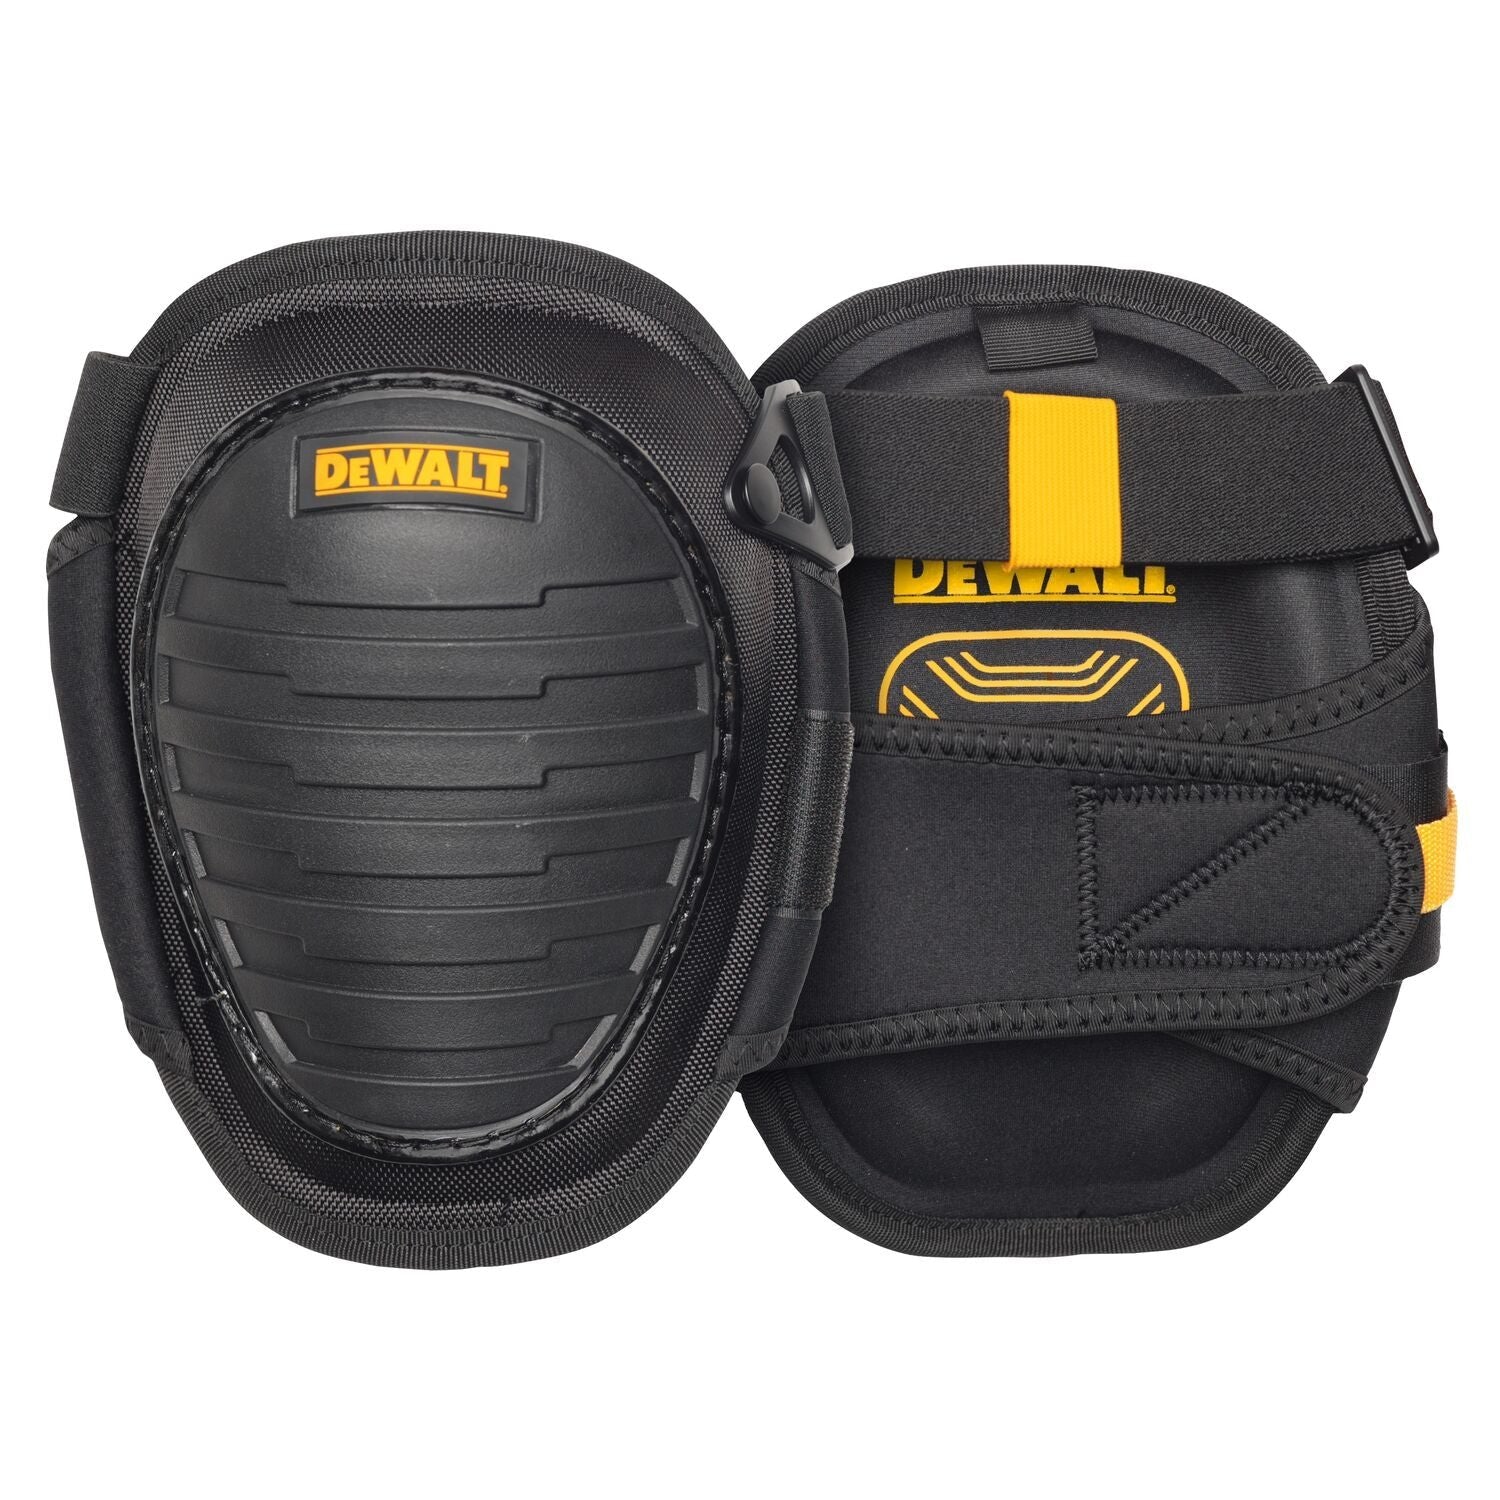 Dewalt DWST590013 - Hard-Shell Knee Pads with Gel